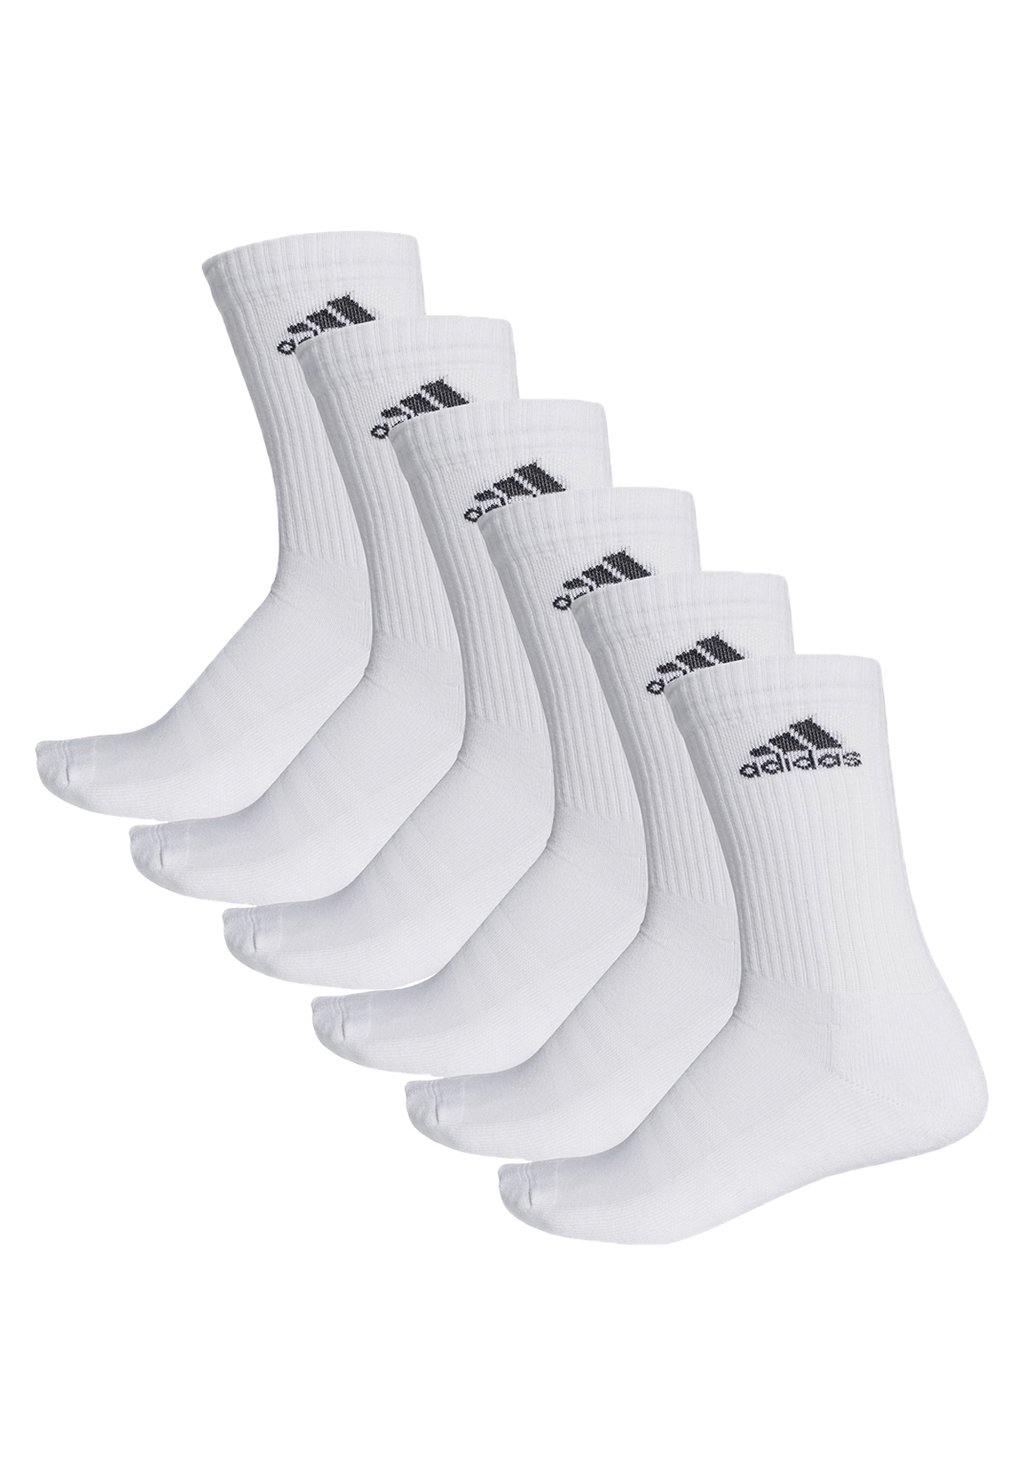 спортивные носки 6 pack unisex adidas performance цвет grey melange Спортивные носки 6 PACK UNISEX adidas Performance, цвет white